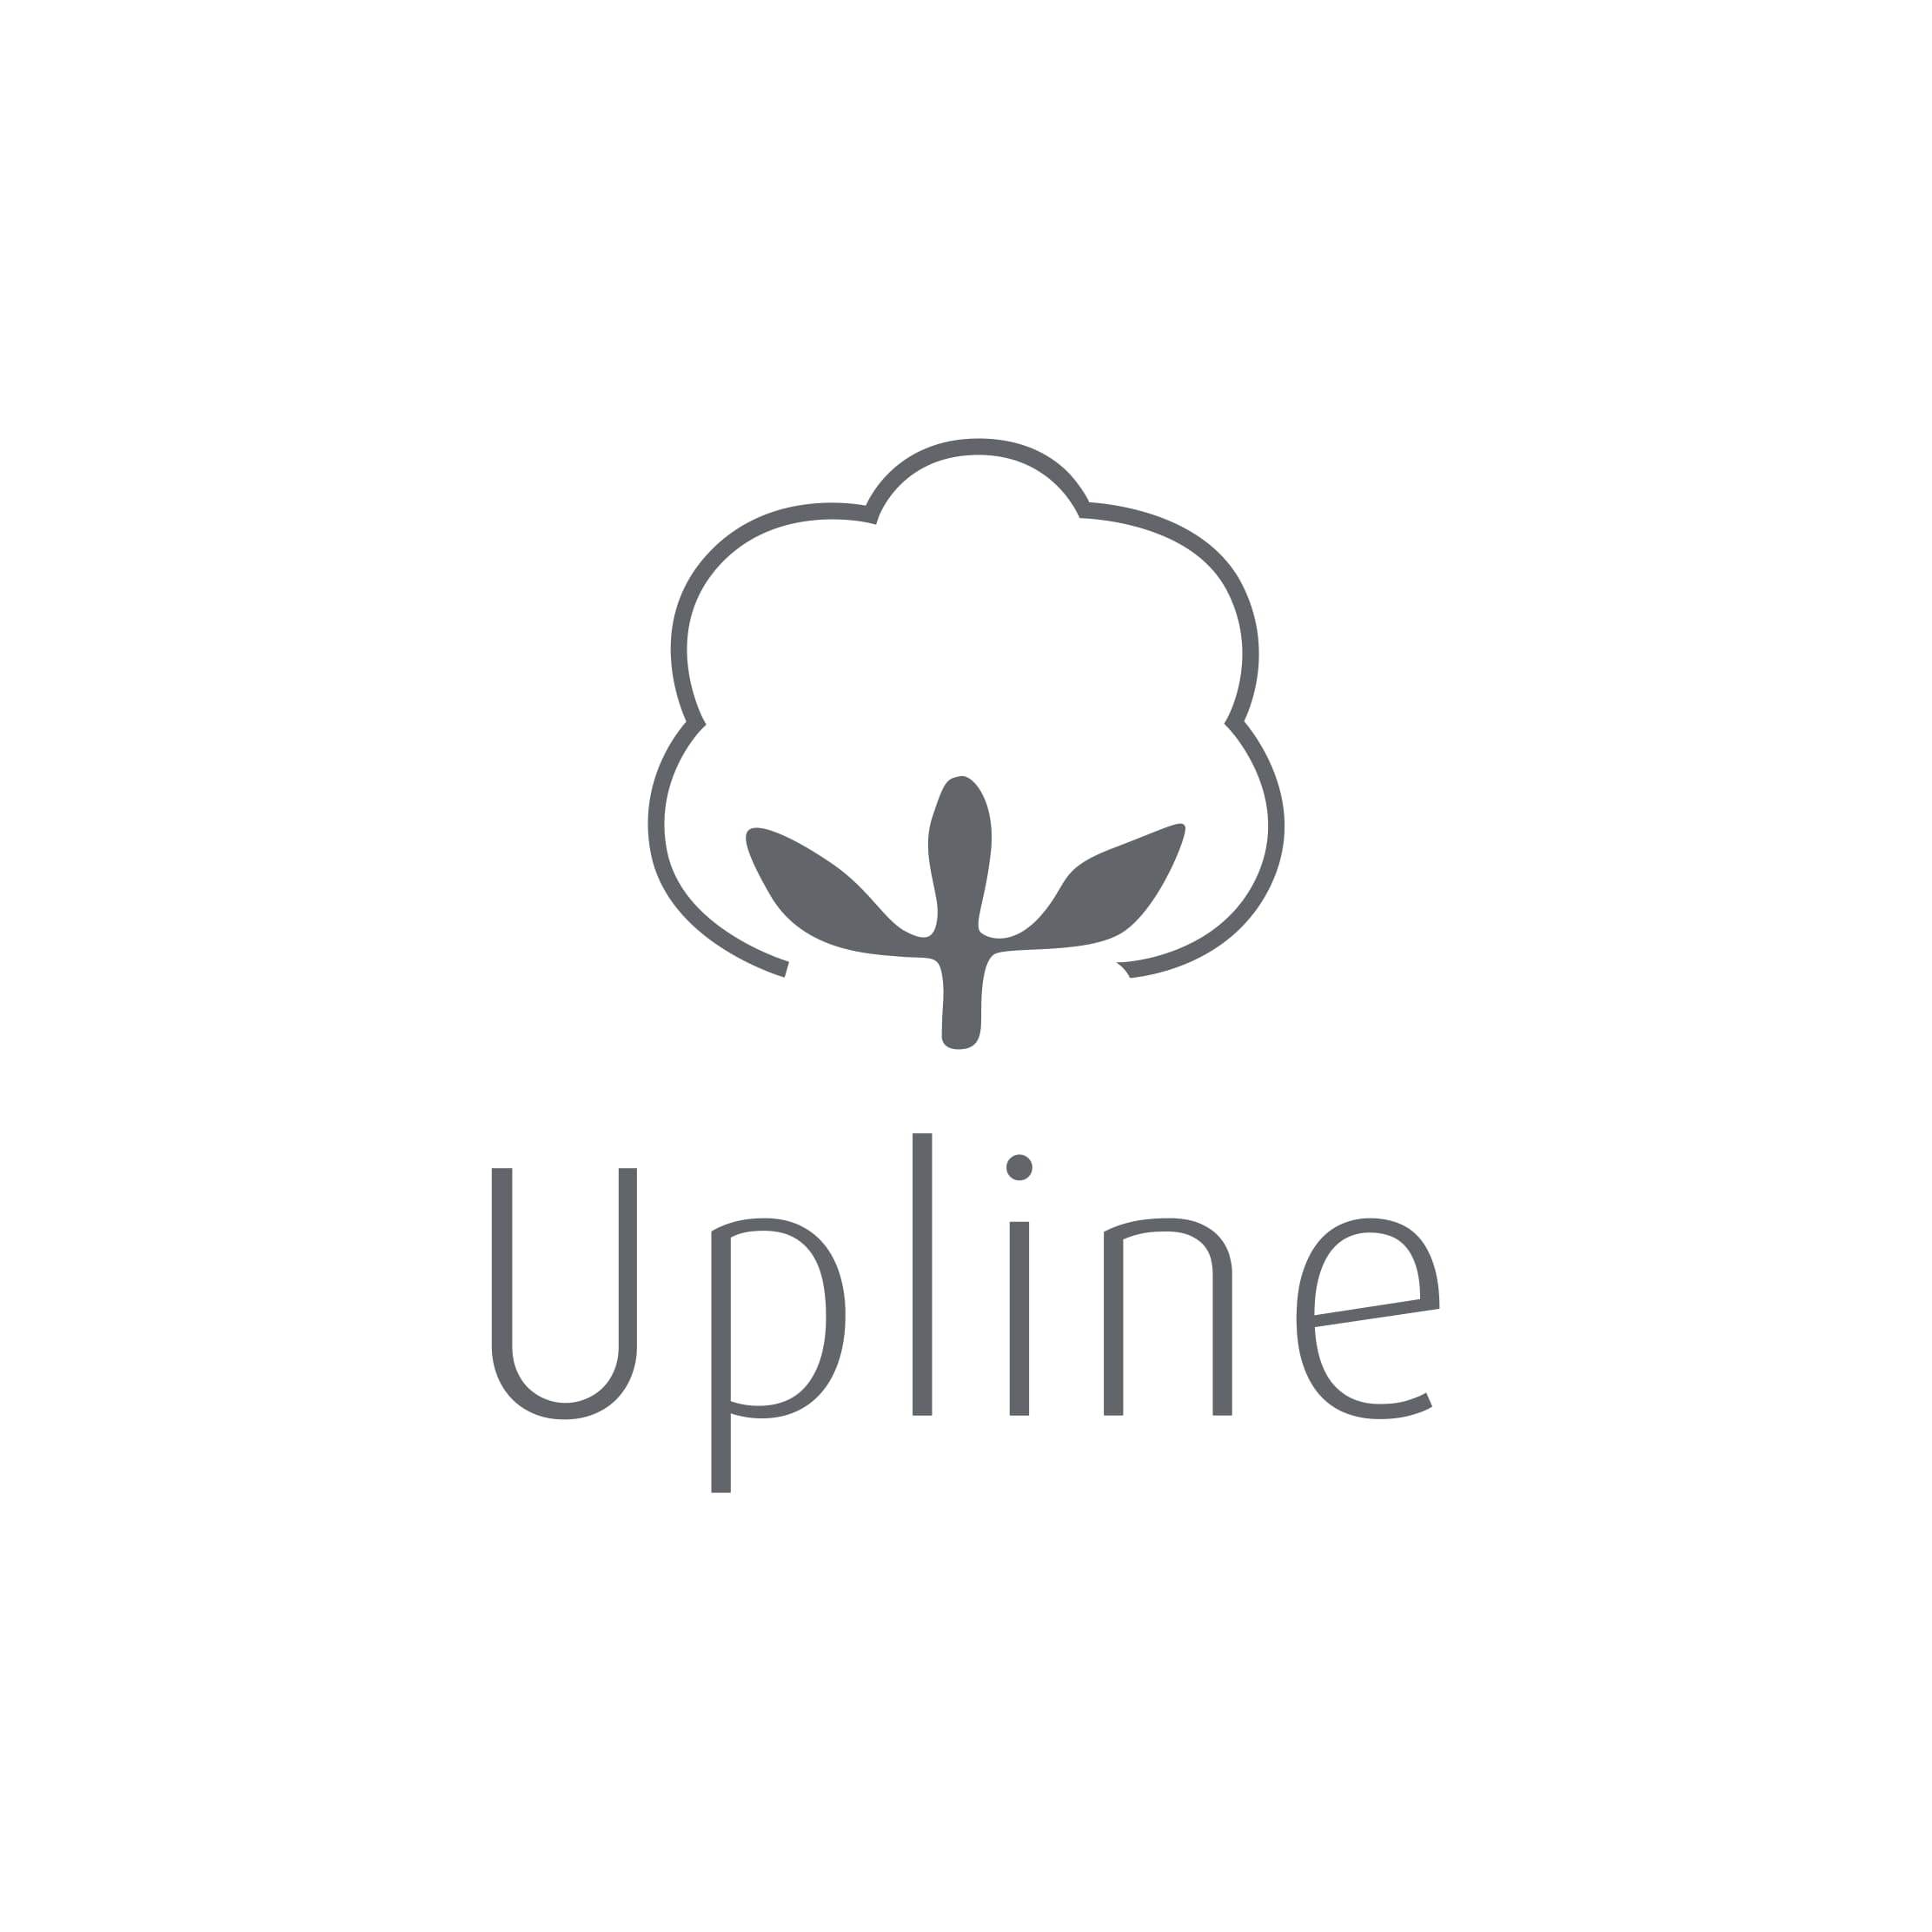 Upline-Home